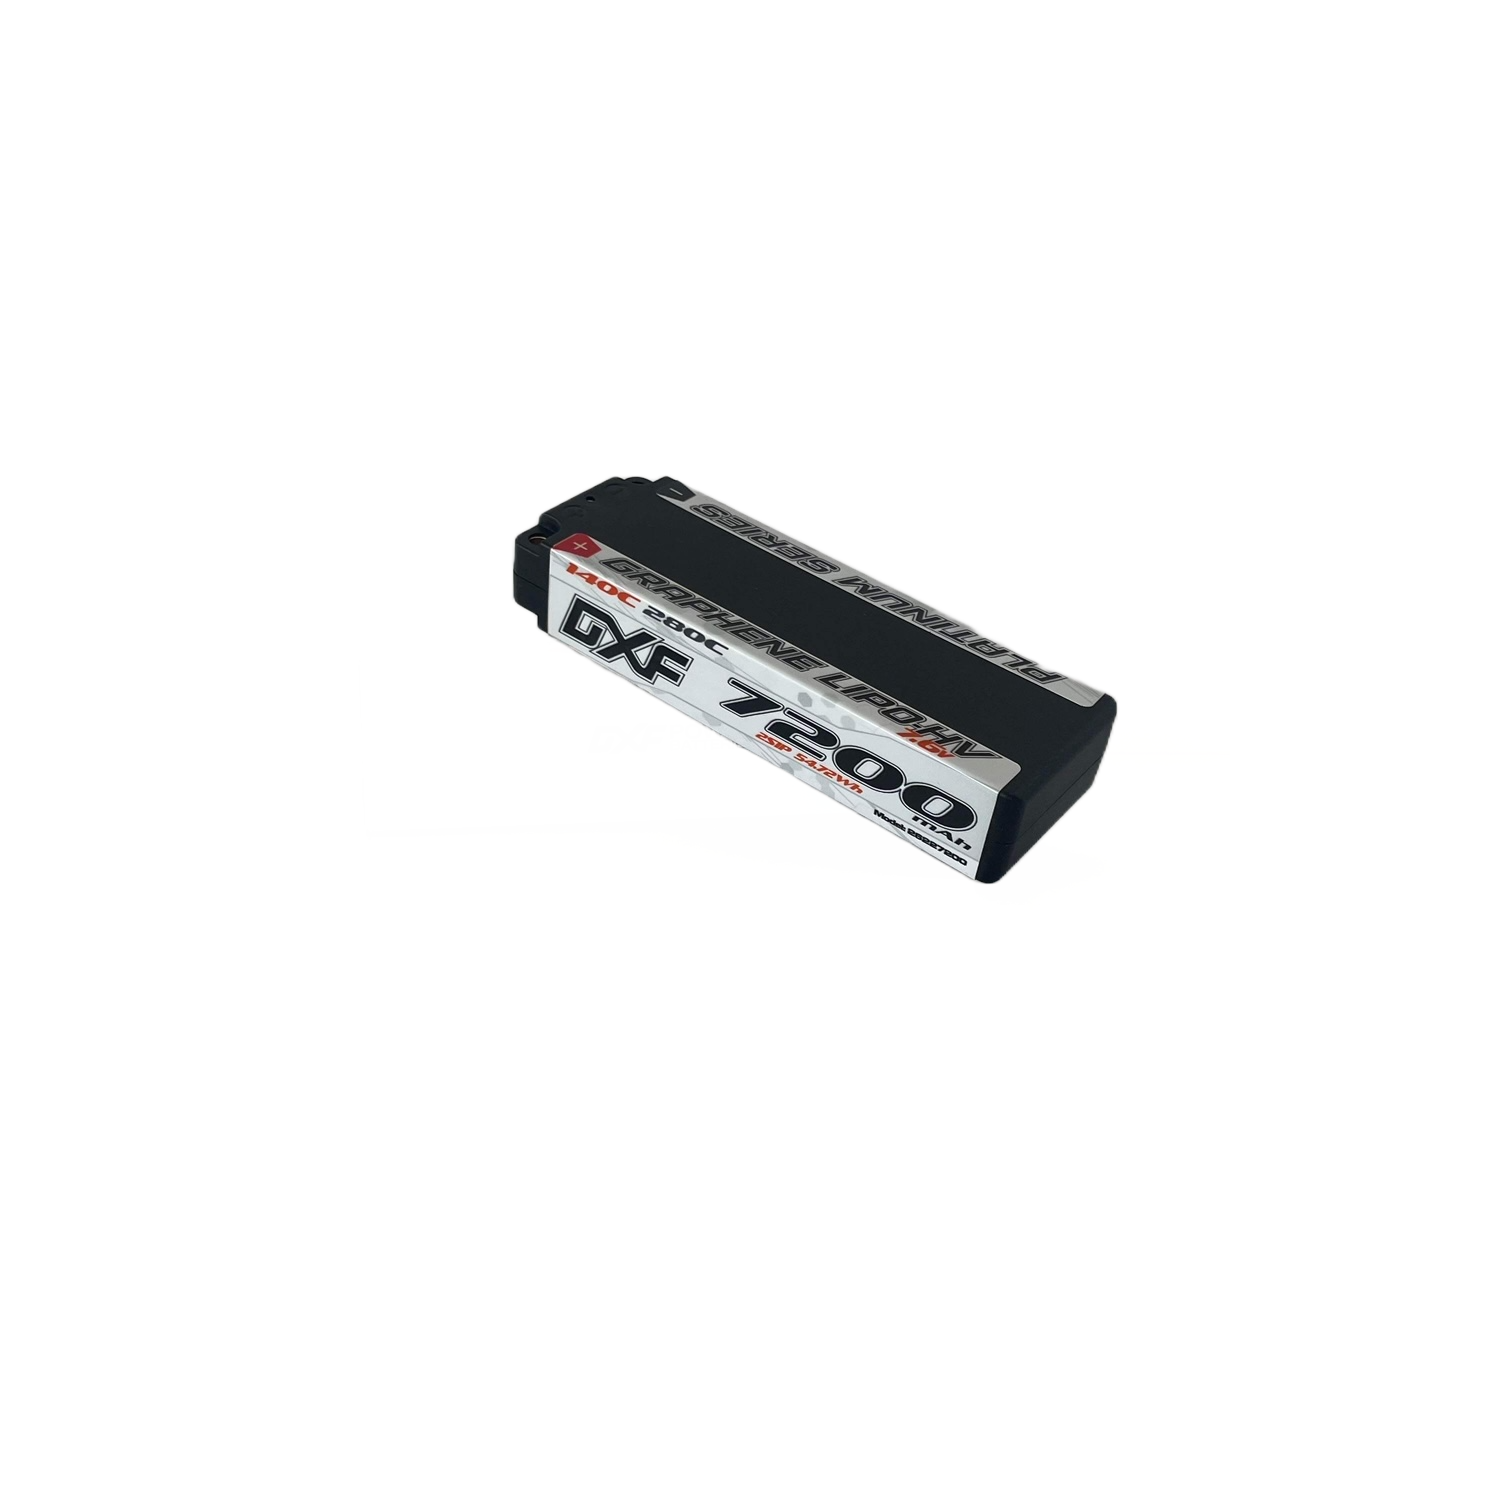 DXF Power Batteries 7.6V (H.V) 7200MAH 140c XT60 Plug - Techtonic Hobbies - DXF Power